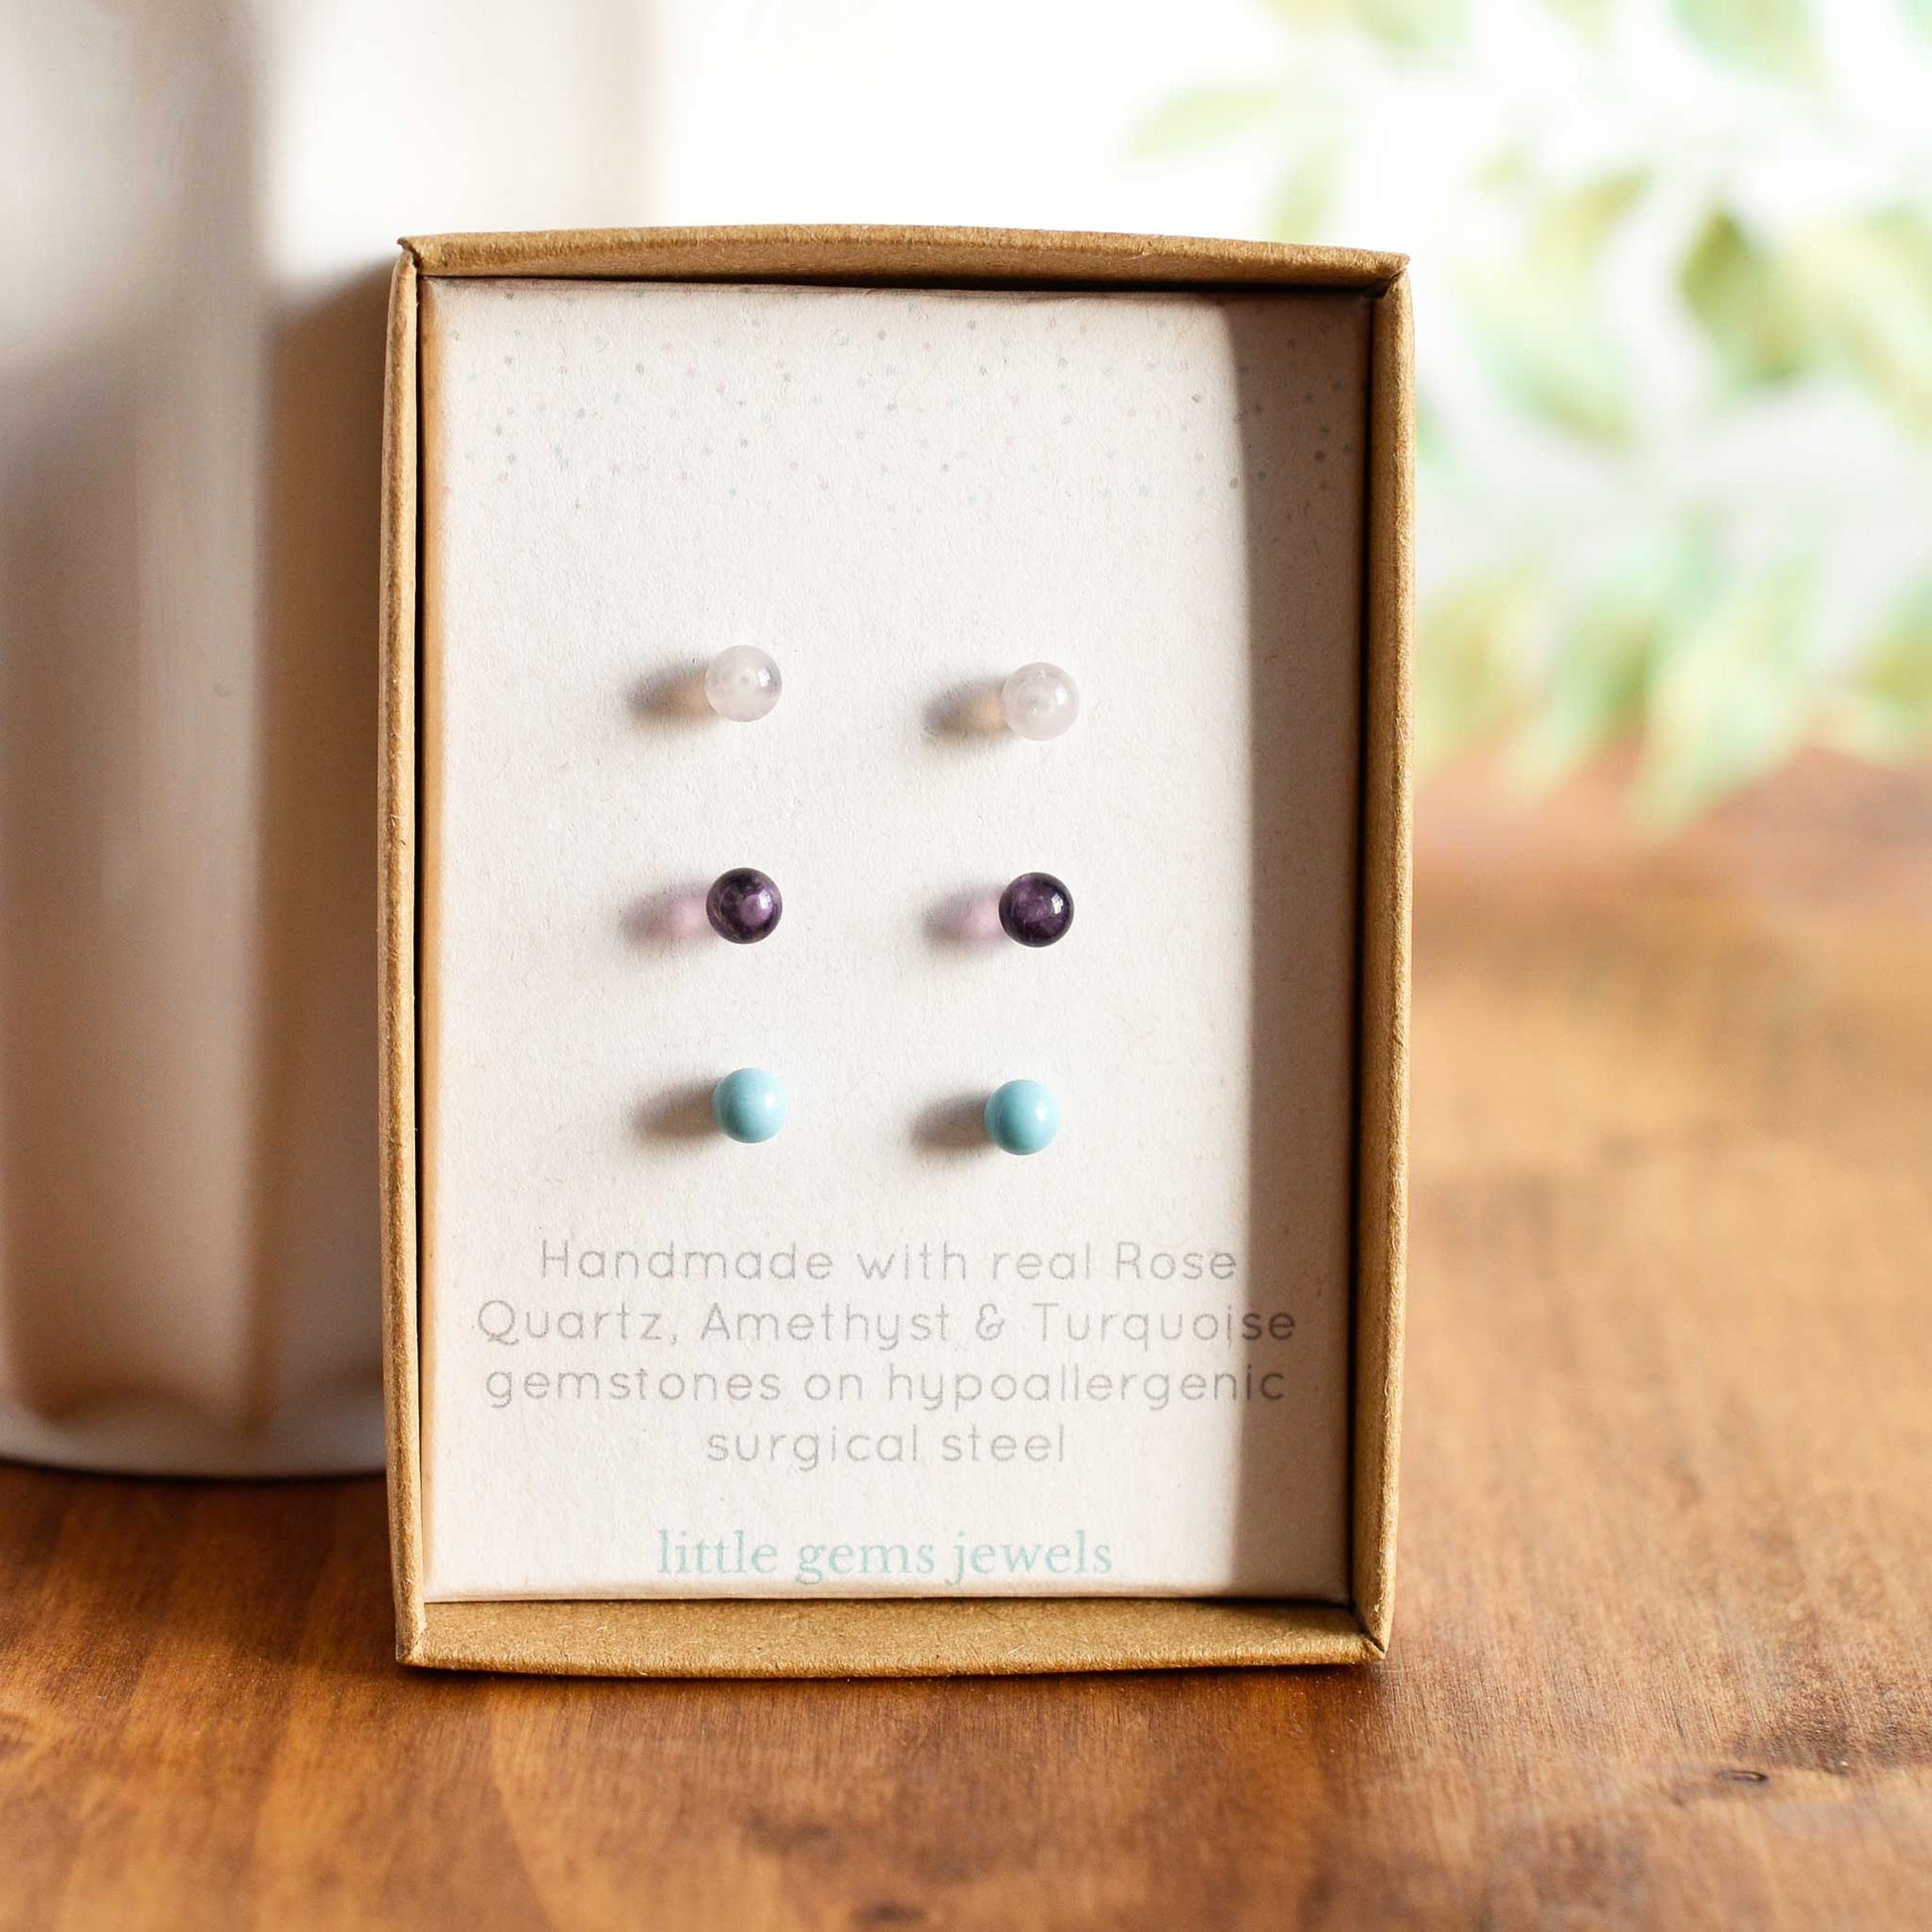 Rose Quartz, Amethyst & Turquoise gemstone stud earring set in eco friendly gift box